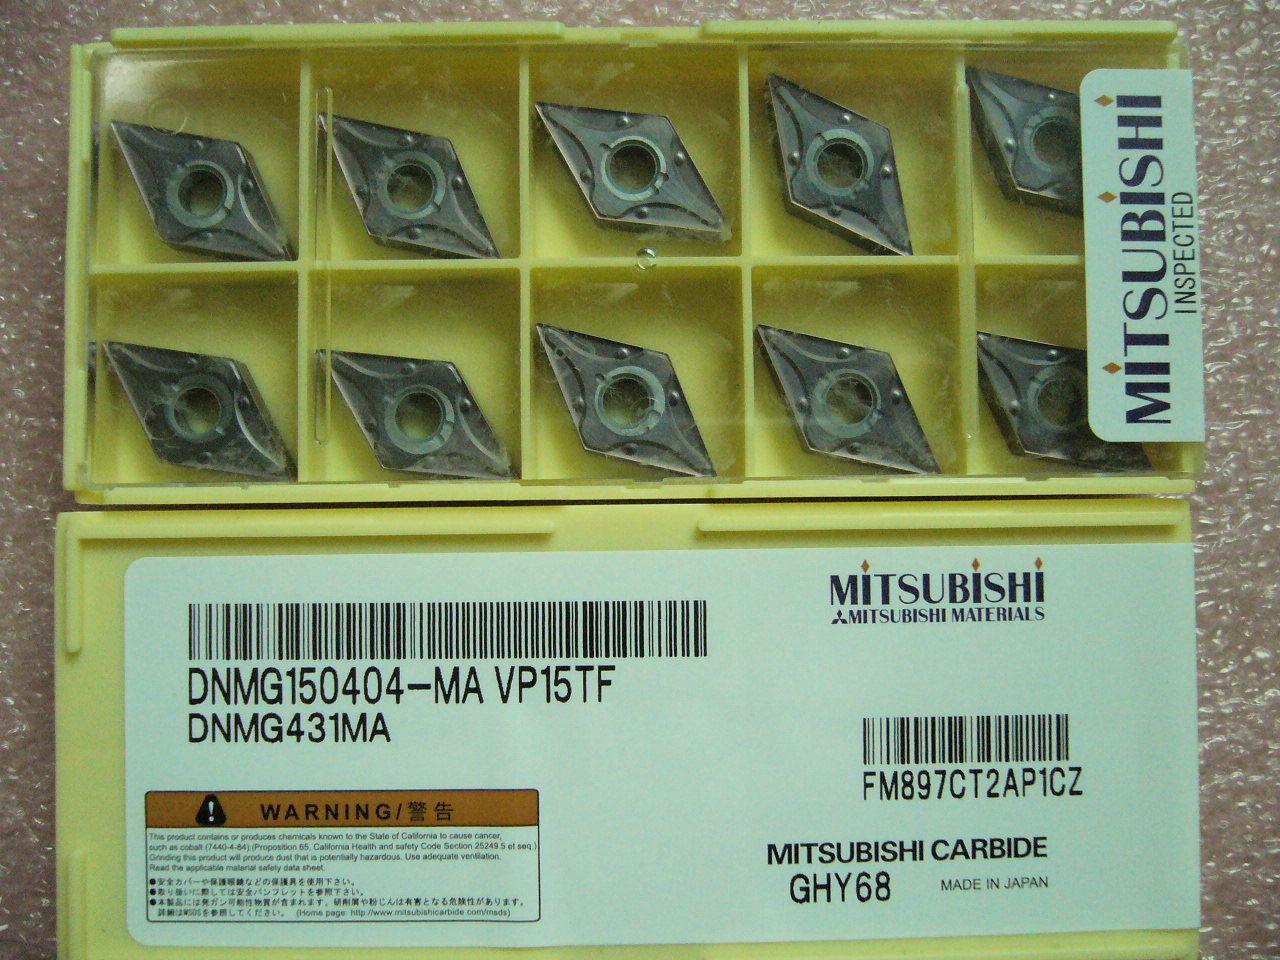 QTY 10x Mitsubishi DNMG431MA DNMG150404-MA VP15TF NEW